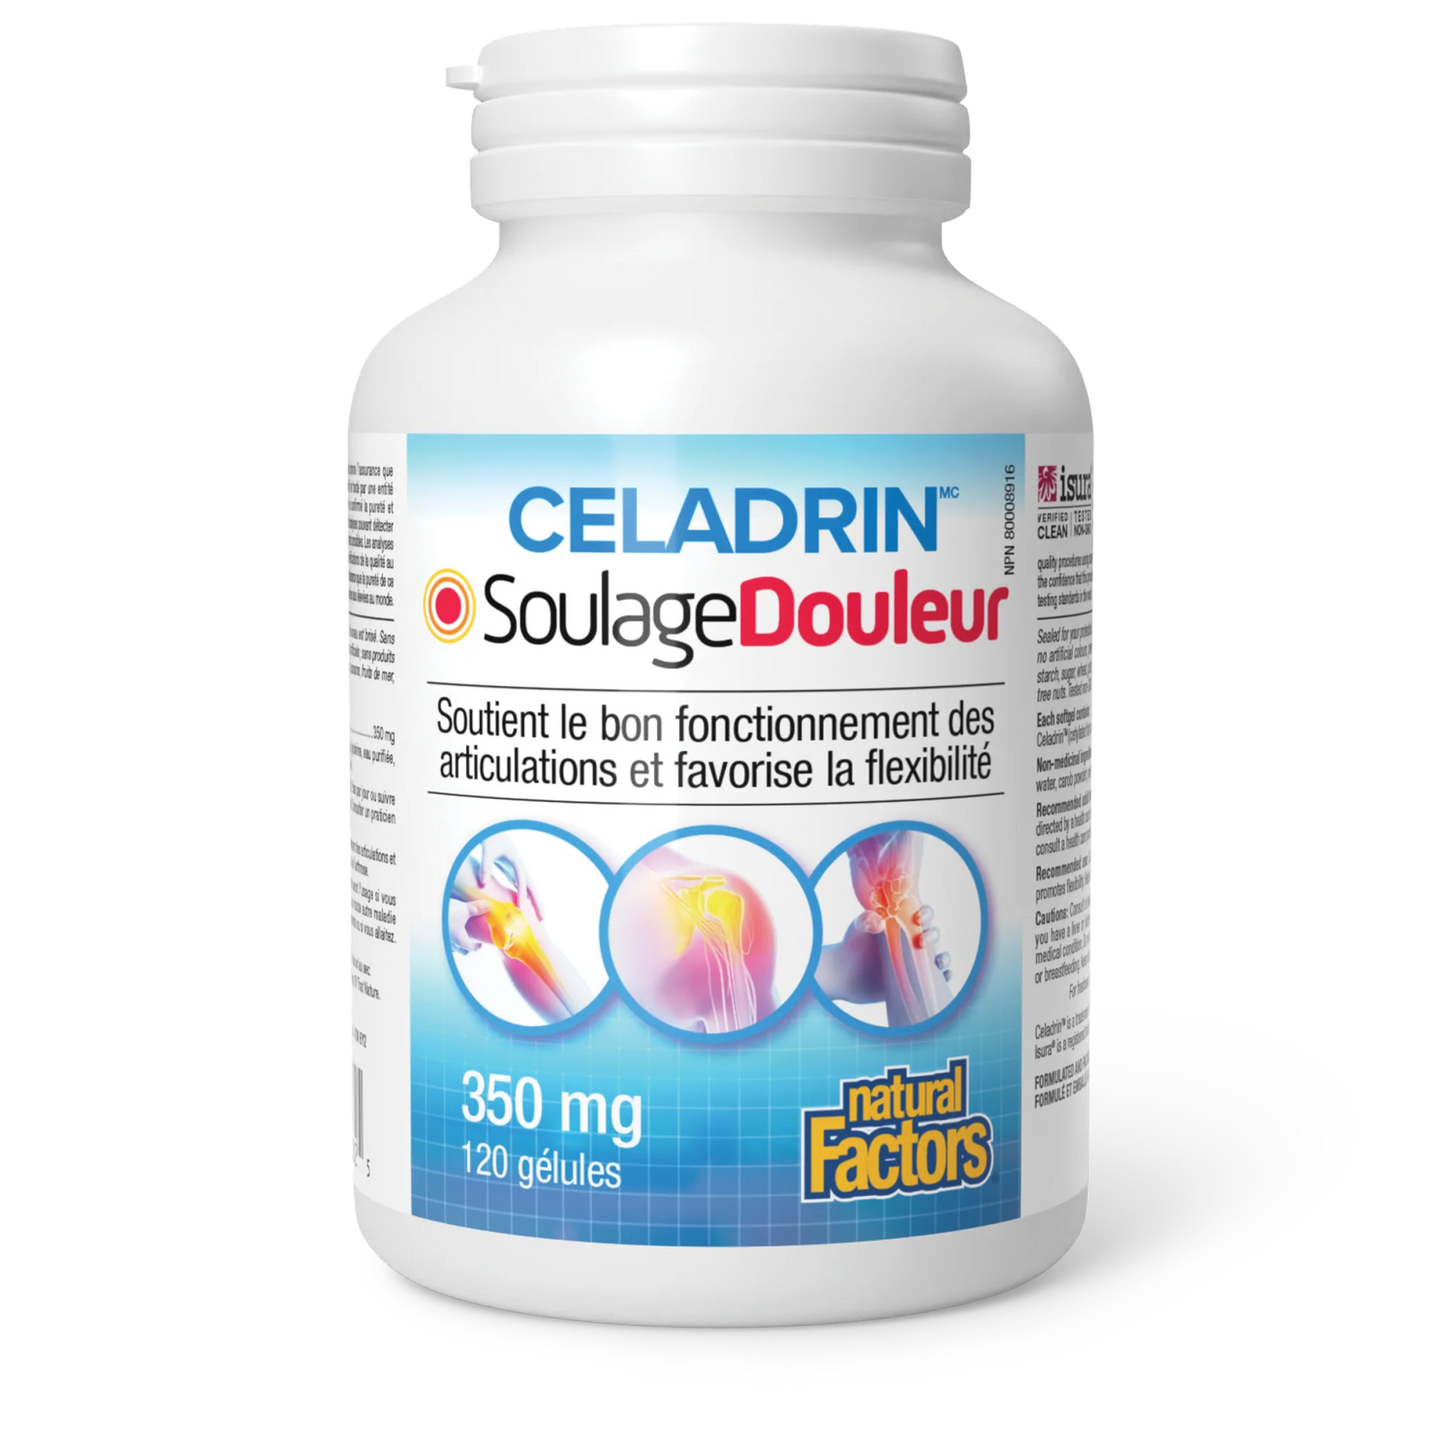 Celadrin SoulageDouleur 350mg 120 gélules